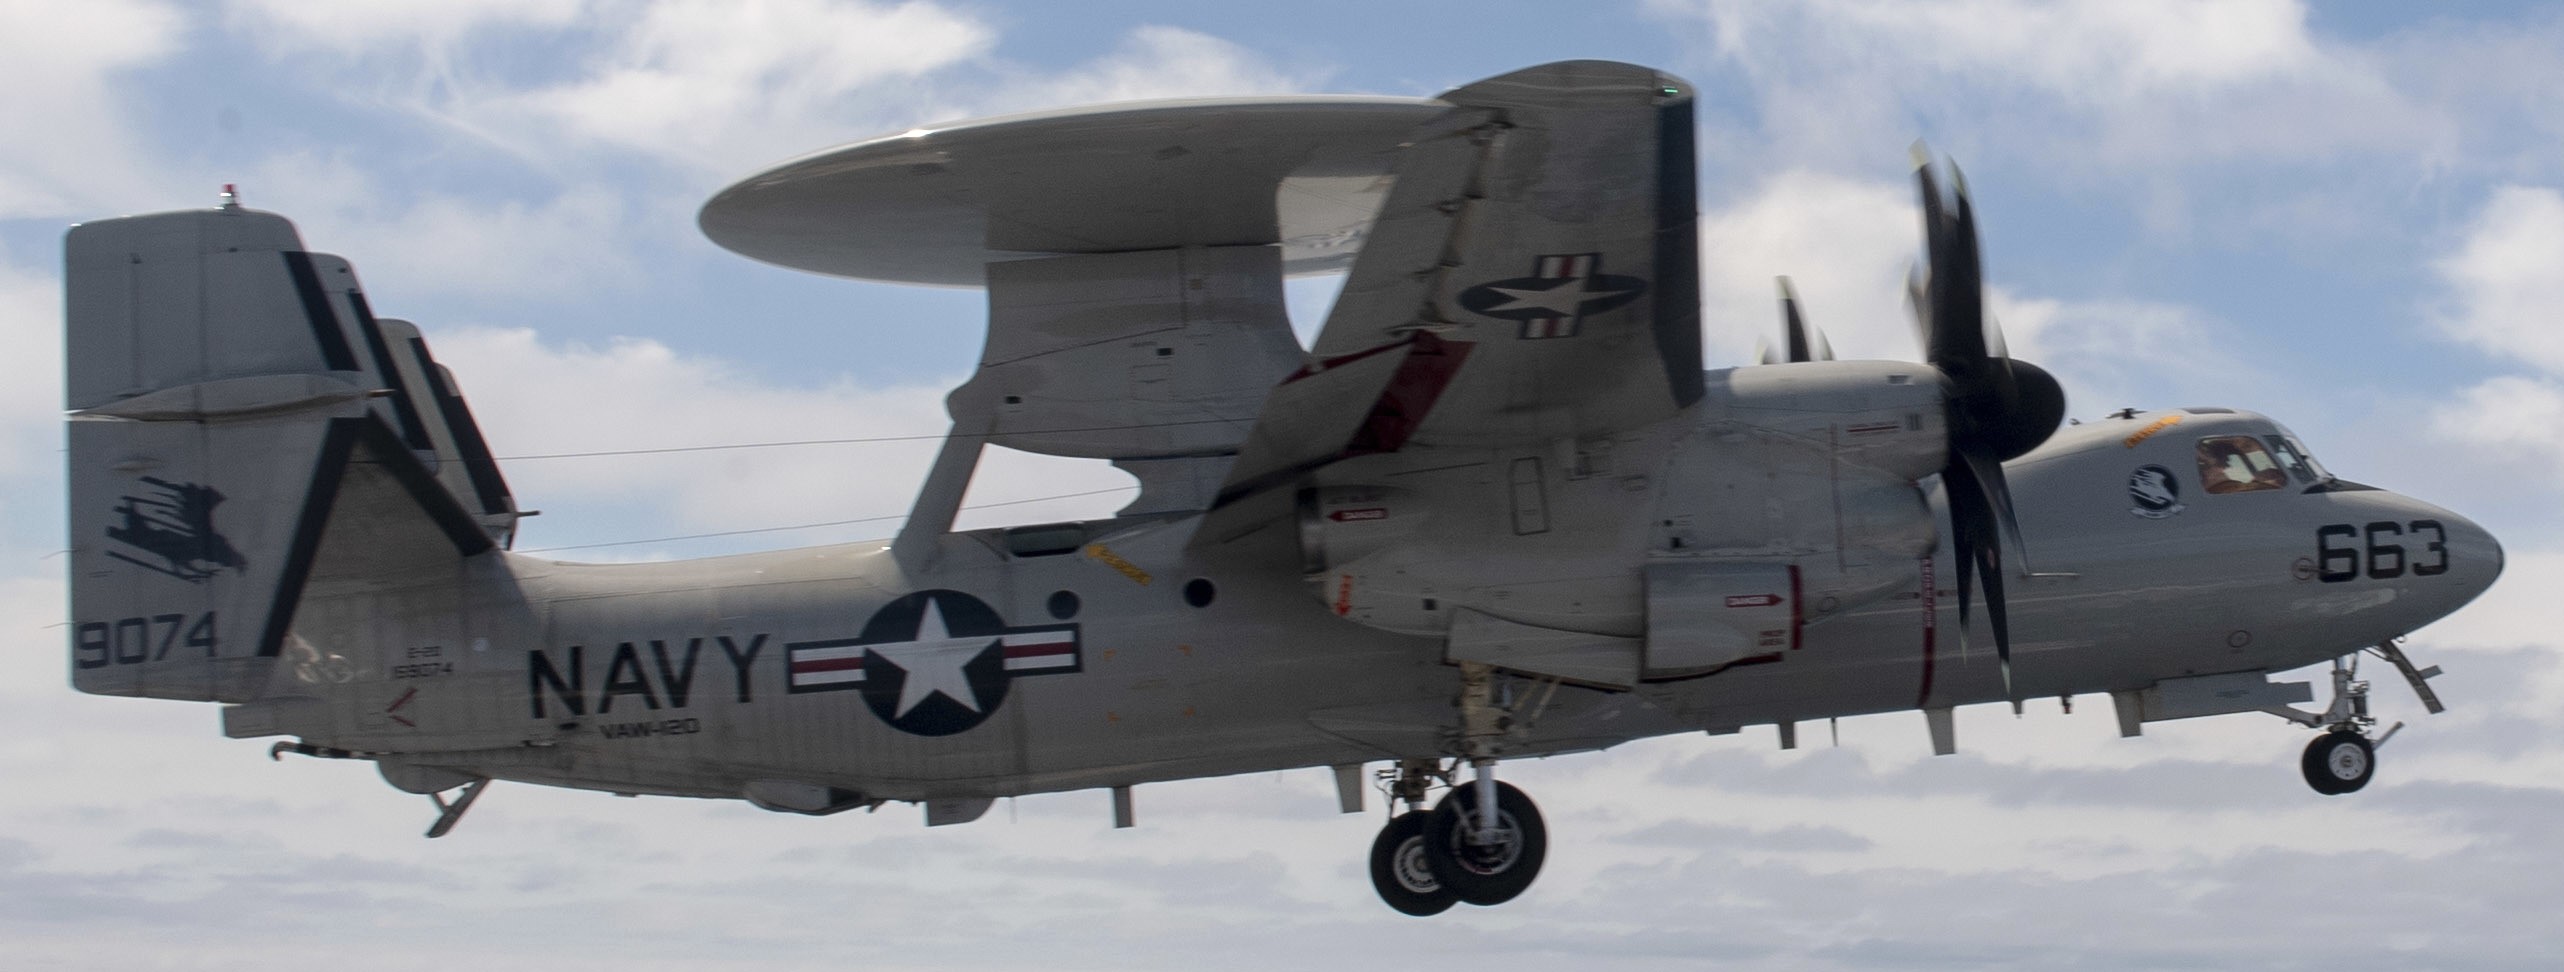 vaw-120 greyhawks airborne command control squadron e-2d advanced hawkeye replacement uss gerald r. ford cvn-78 47